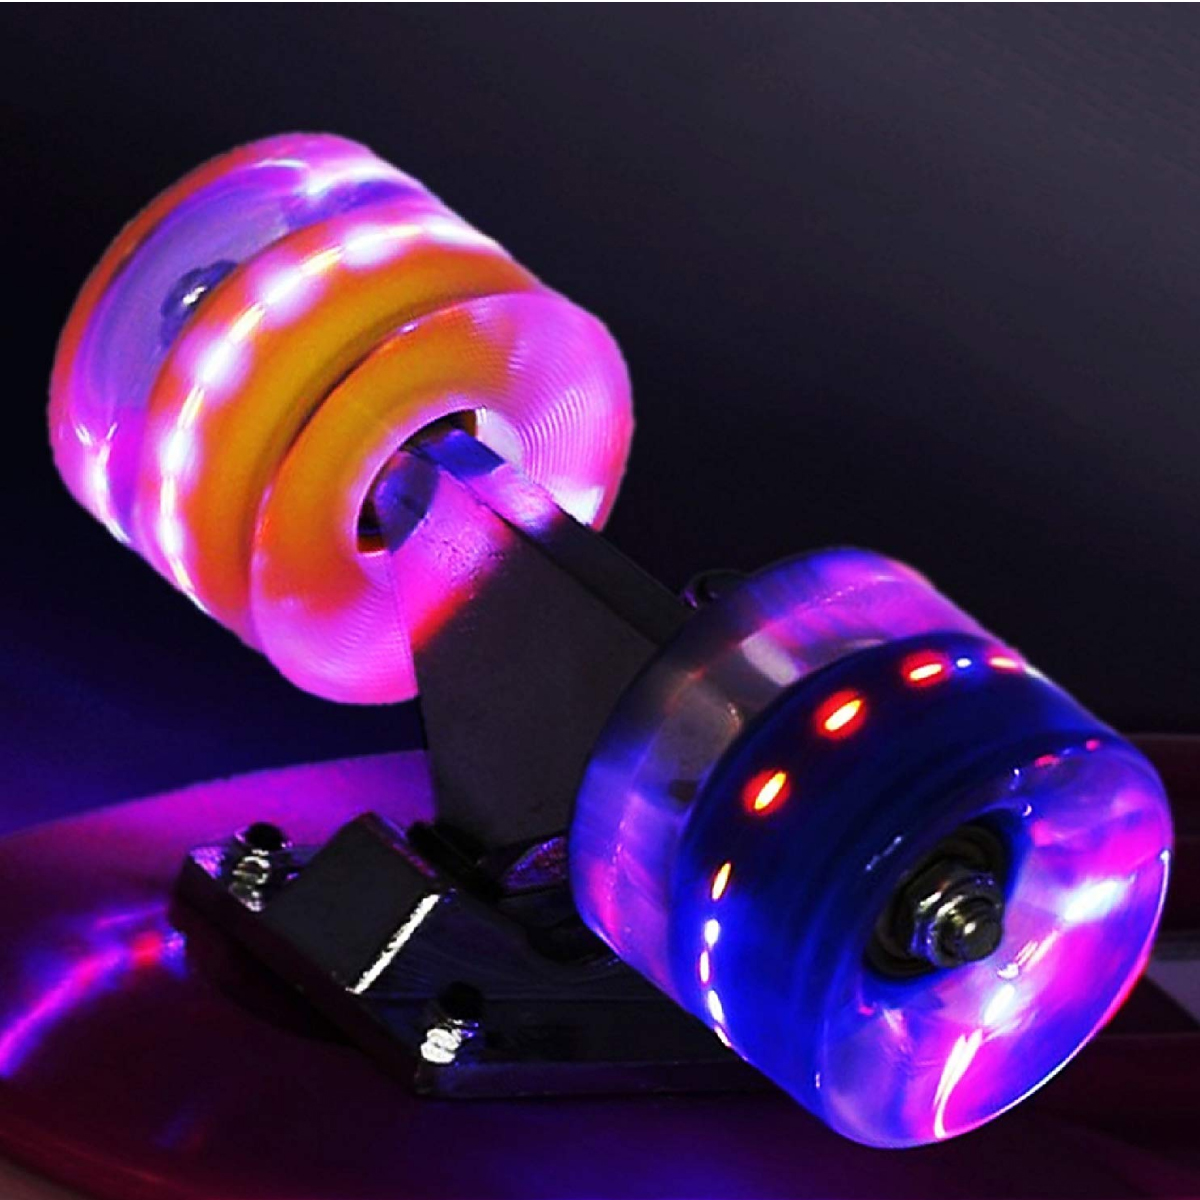 Merkapa 22 Complete Skateboard with Colorful LED Light up Wheels for Beginners 